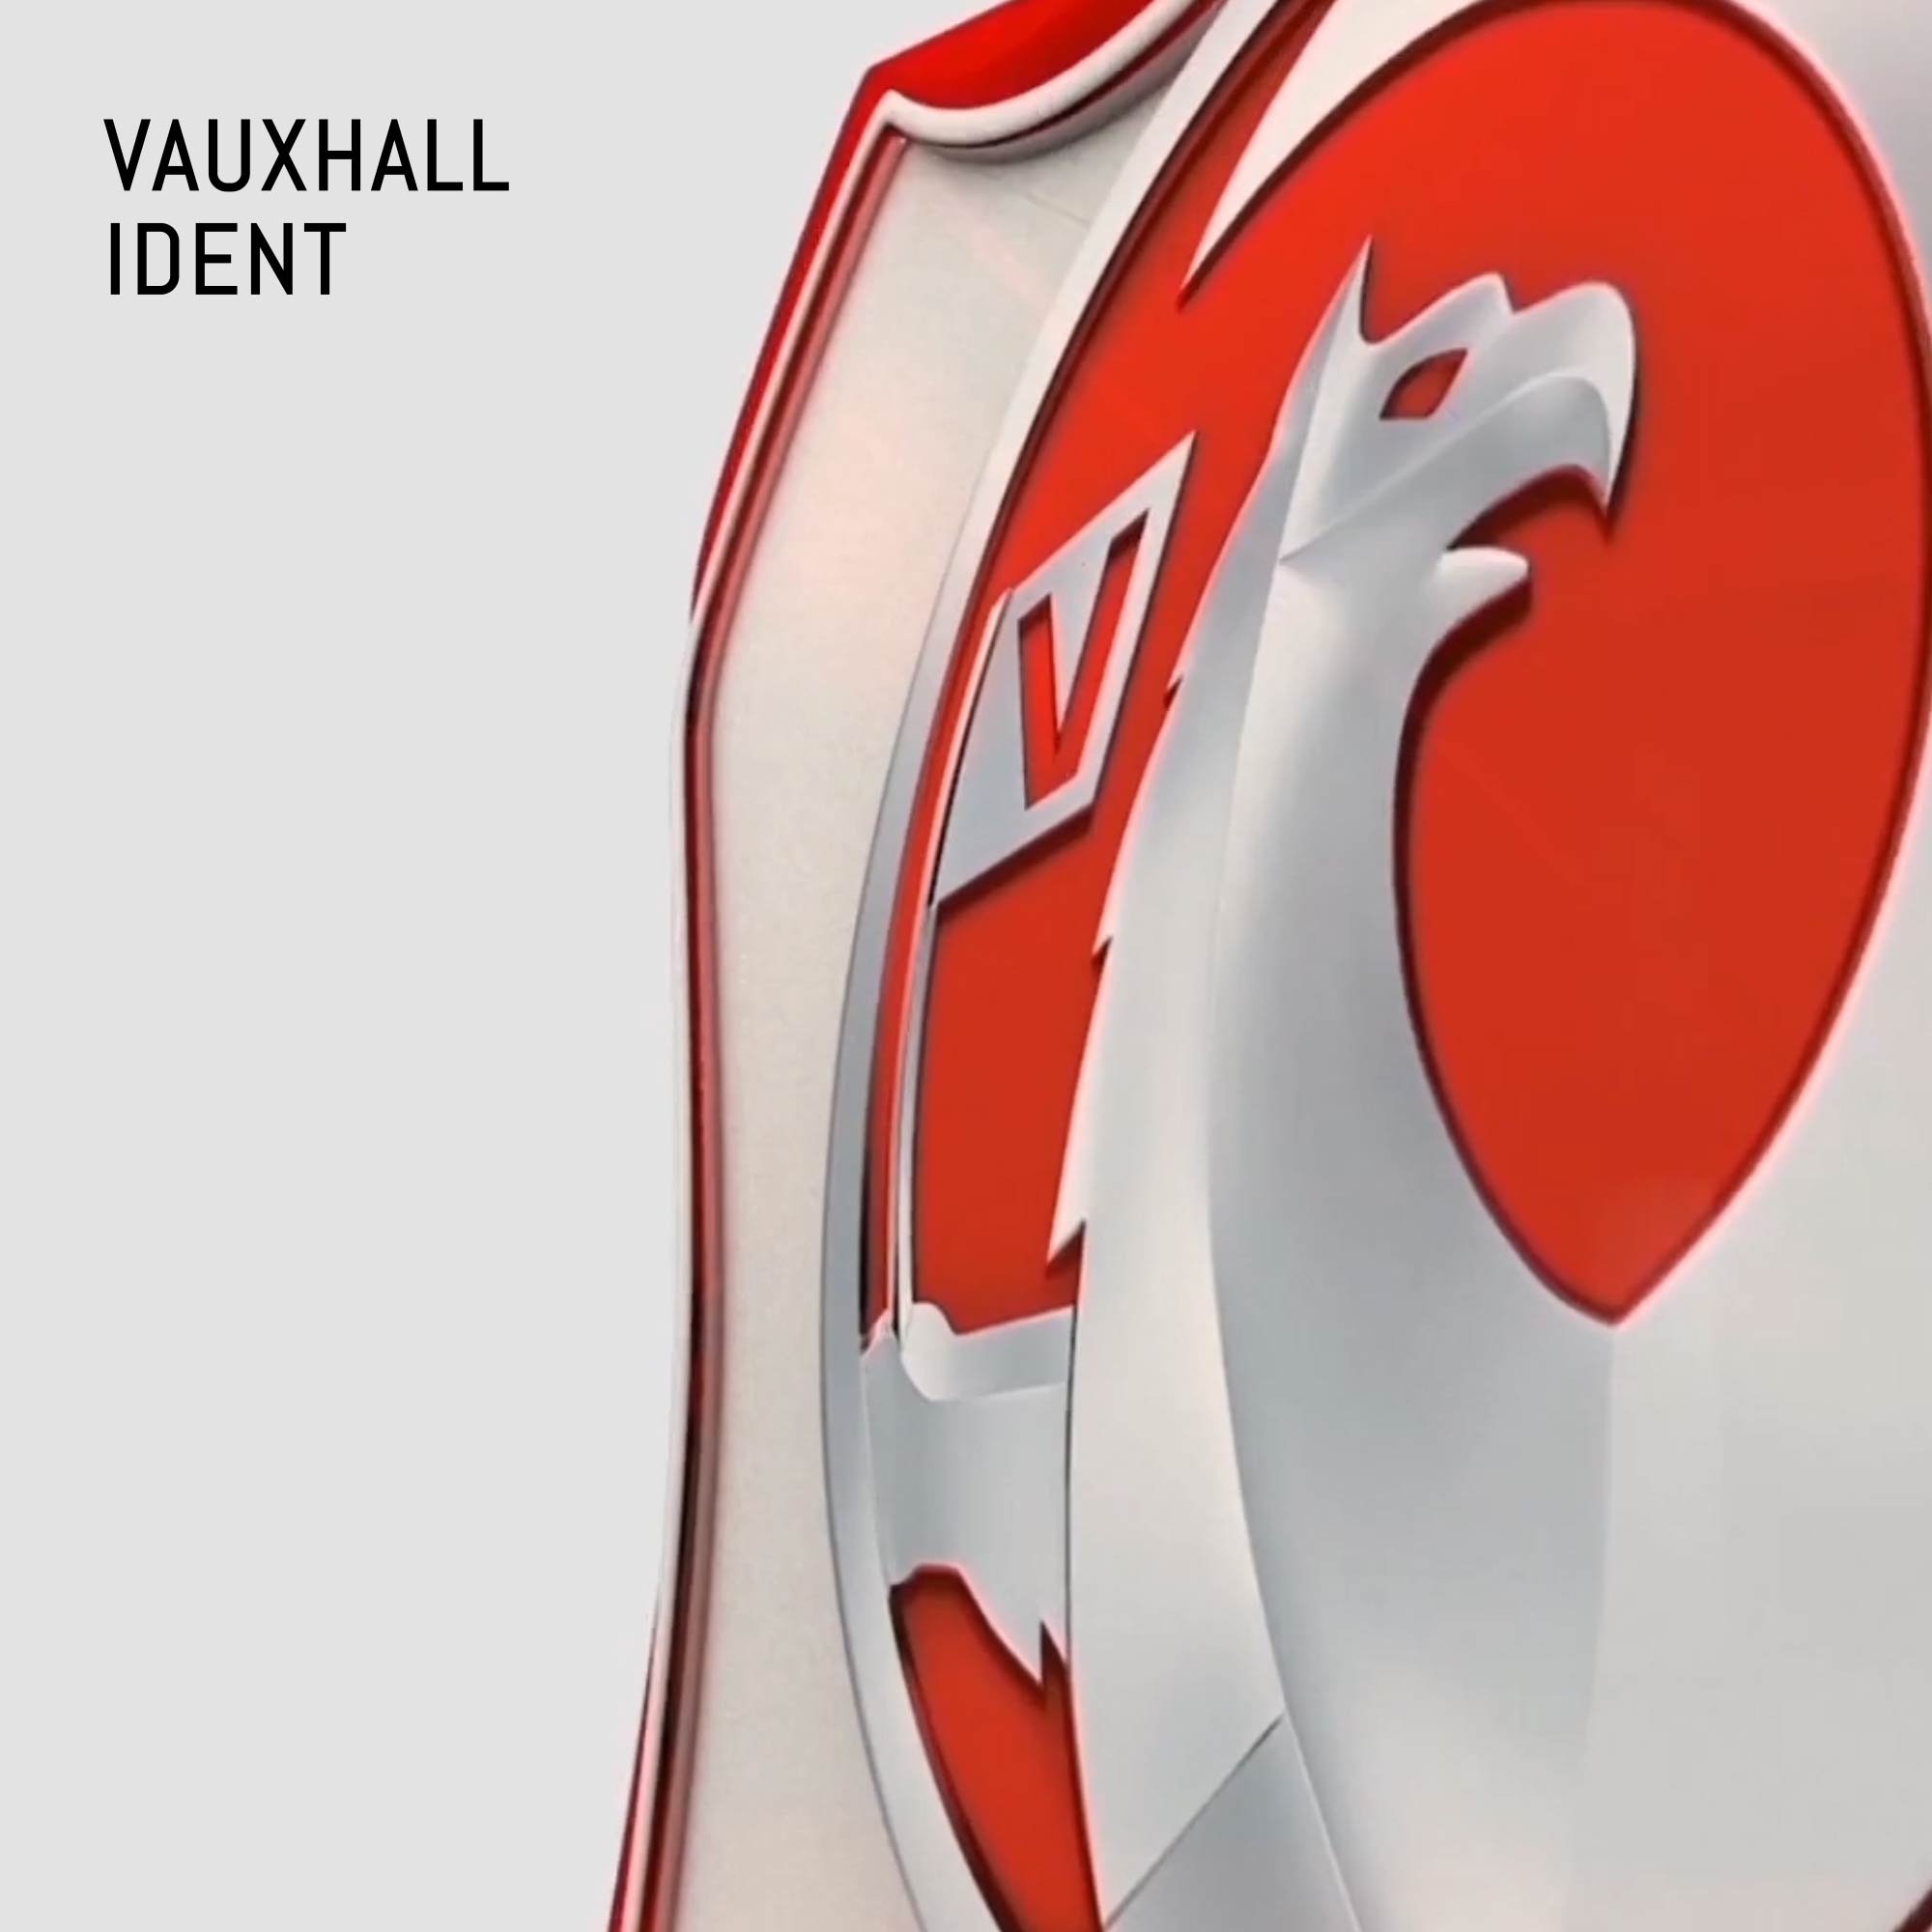 Vauxhall Ident_00142.jpg